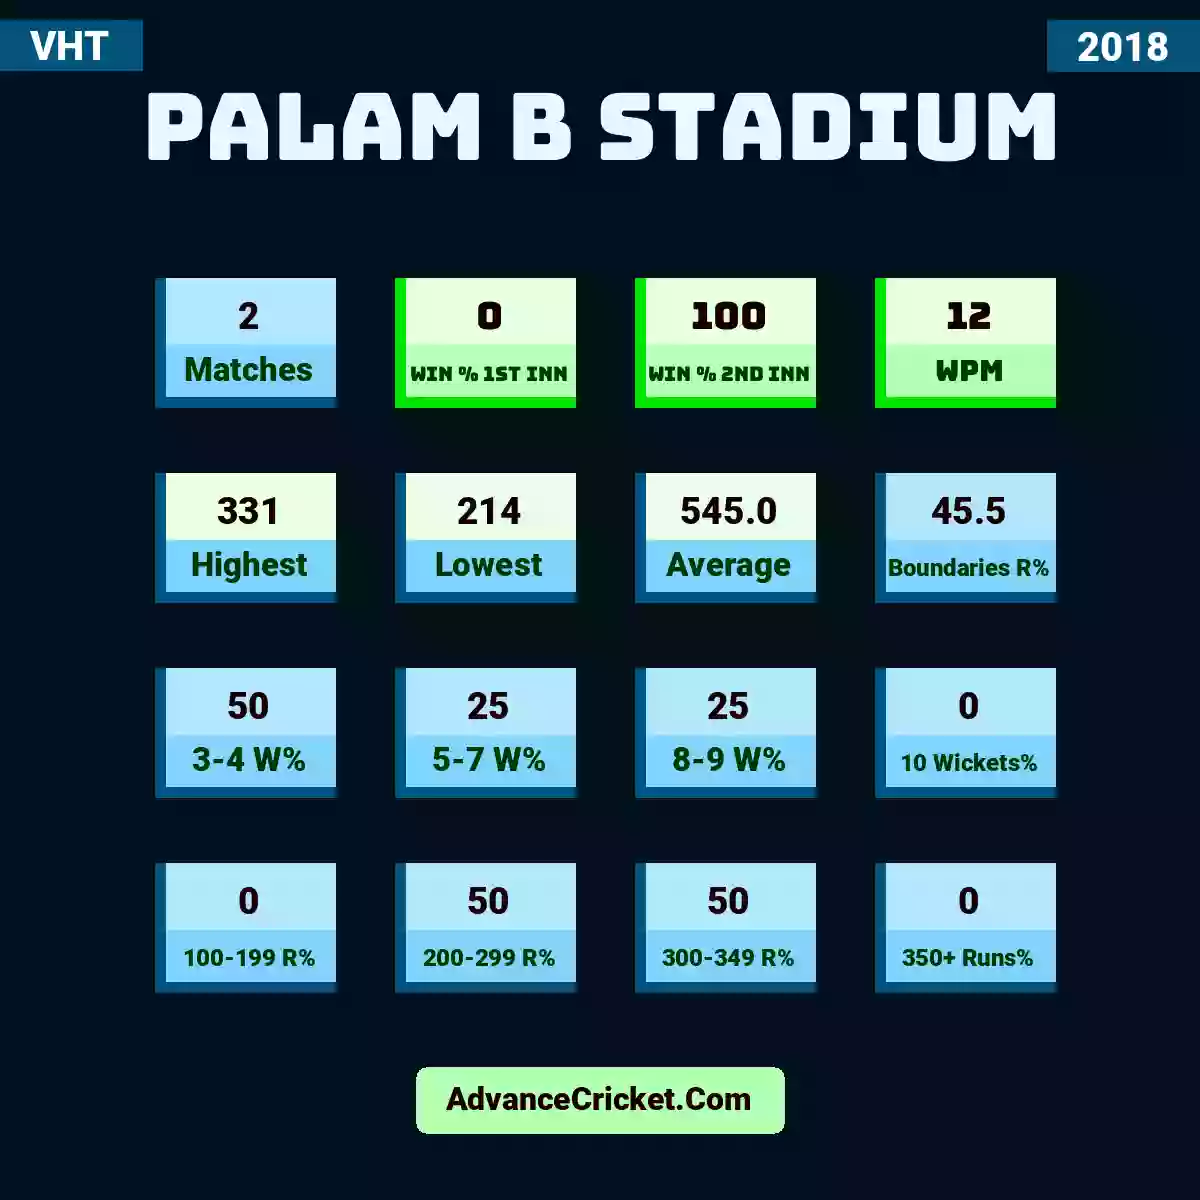 Image showing Palam B Stadium with Matches: 2, Win % 1st Inn: 0, Win % 2nd Inn: 100, WPM: 12, Highest: 331, Lowest: 214, Average: 545.0, Boundaries R%: 45.5, 3-4 W%: 50, 5-7 W%: 25, 8-9 W%: 25, 10 Wickets%: 0, 100-199 R%: 0, 200-299 R%: 50, 300-349 R%: 50, 350+ Runs%: 0.